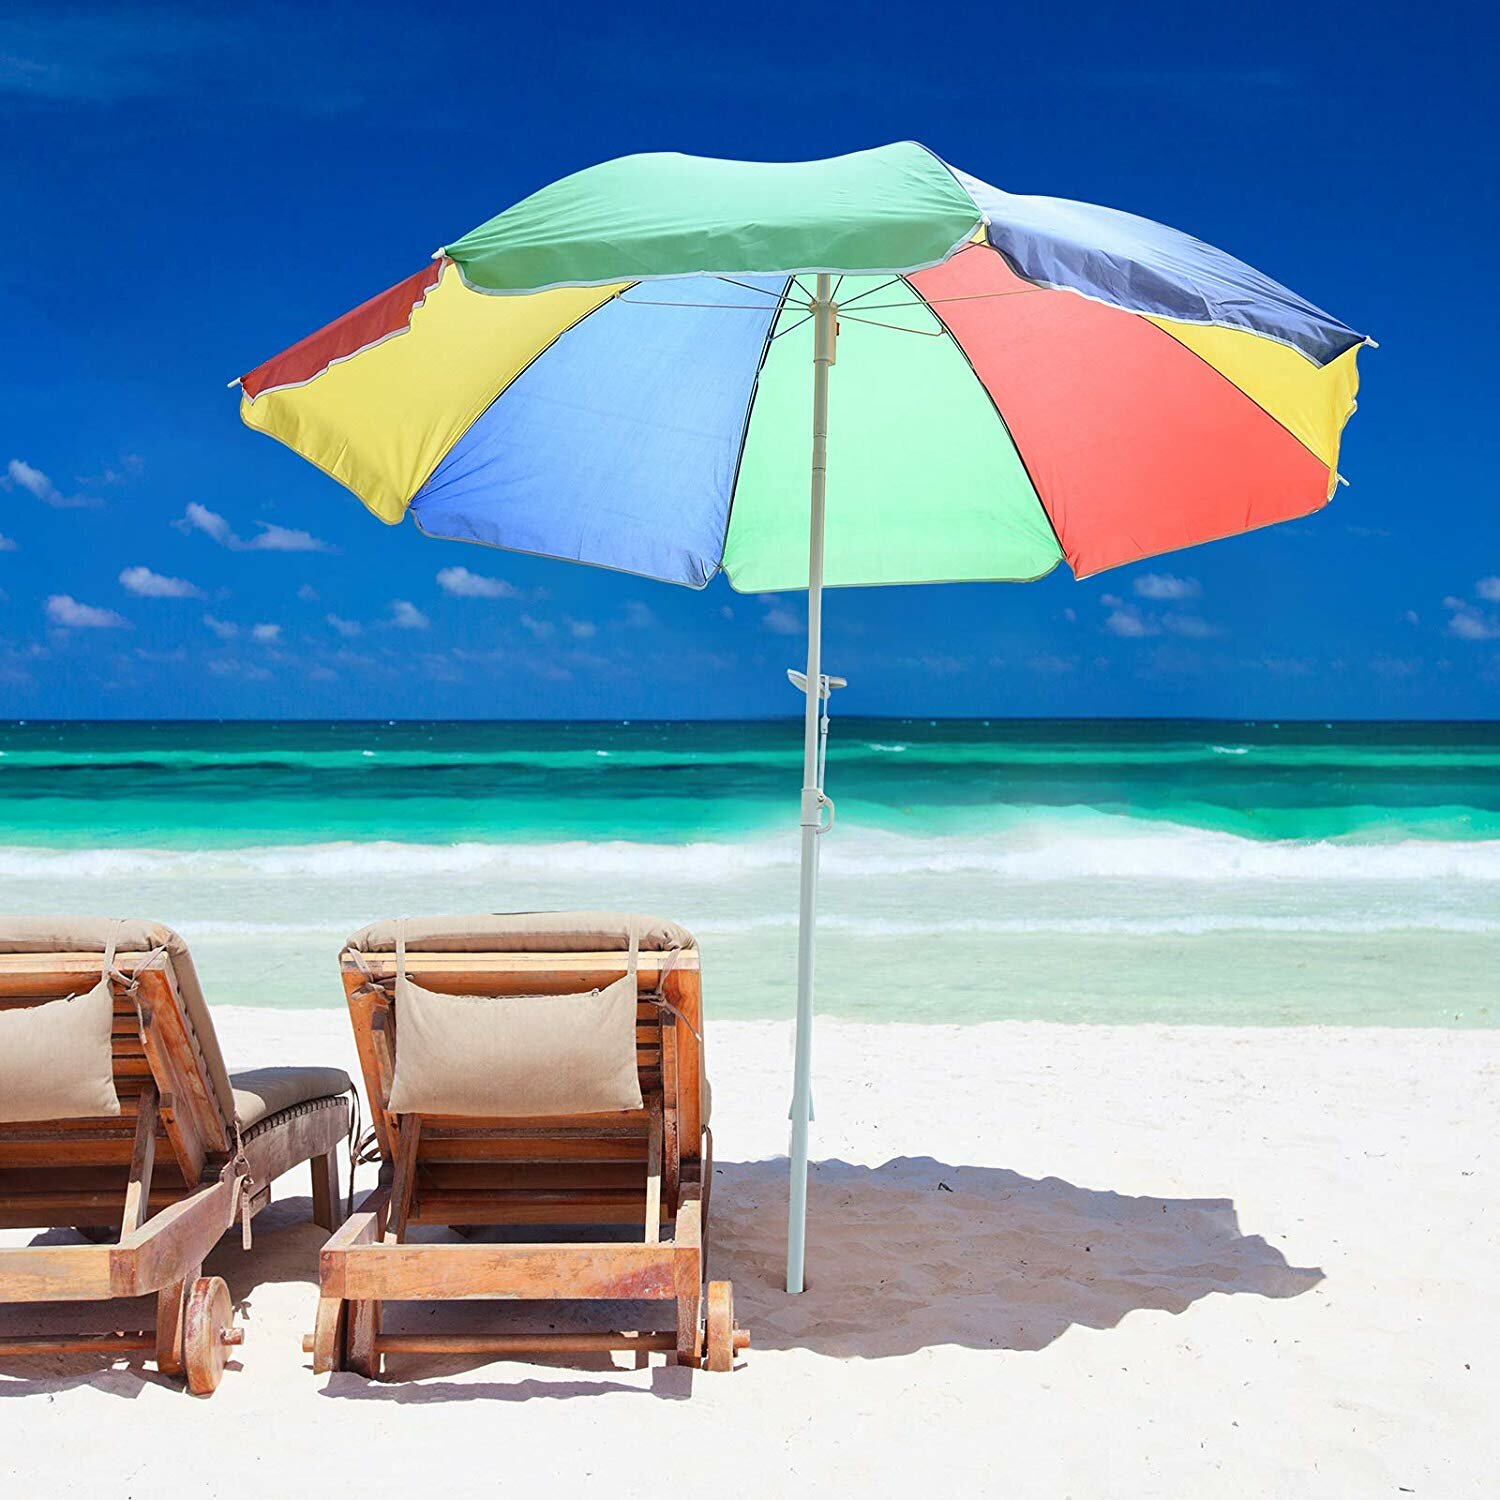 Rosecliff Heights Melina 5' Beach Umbrella - Wayfair Canada